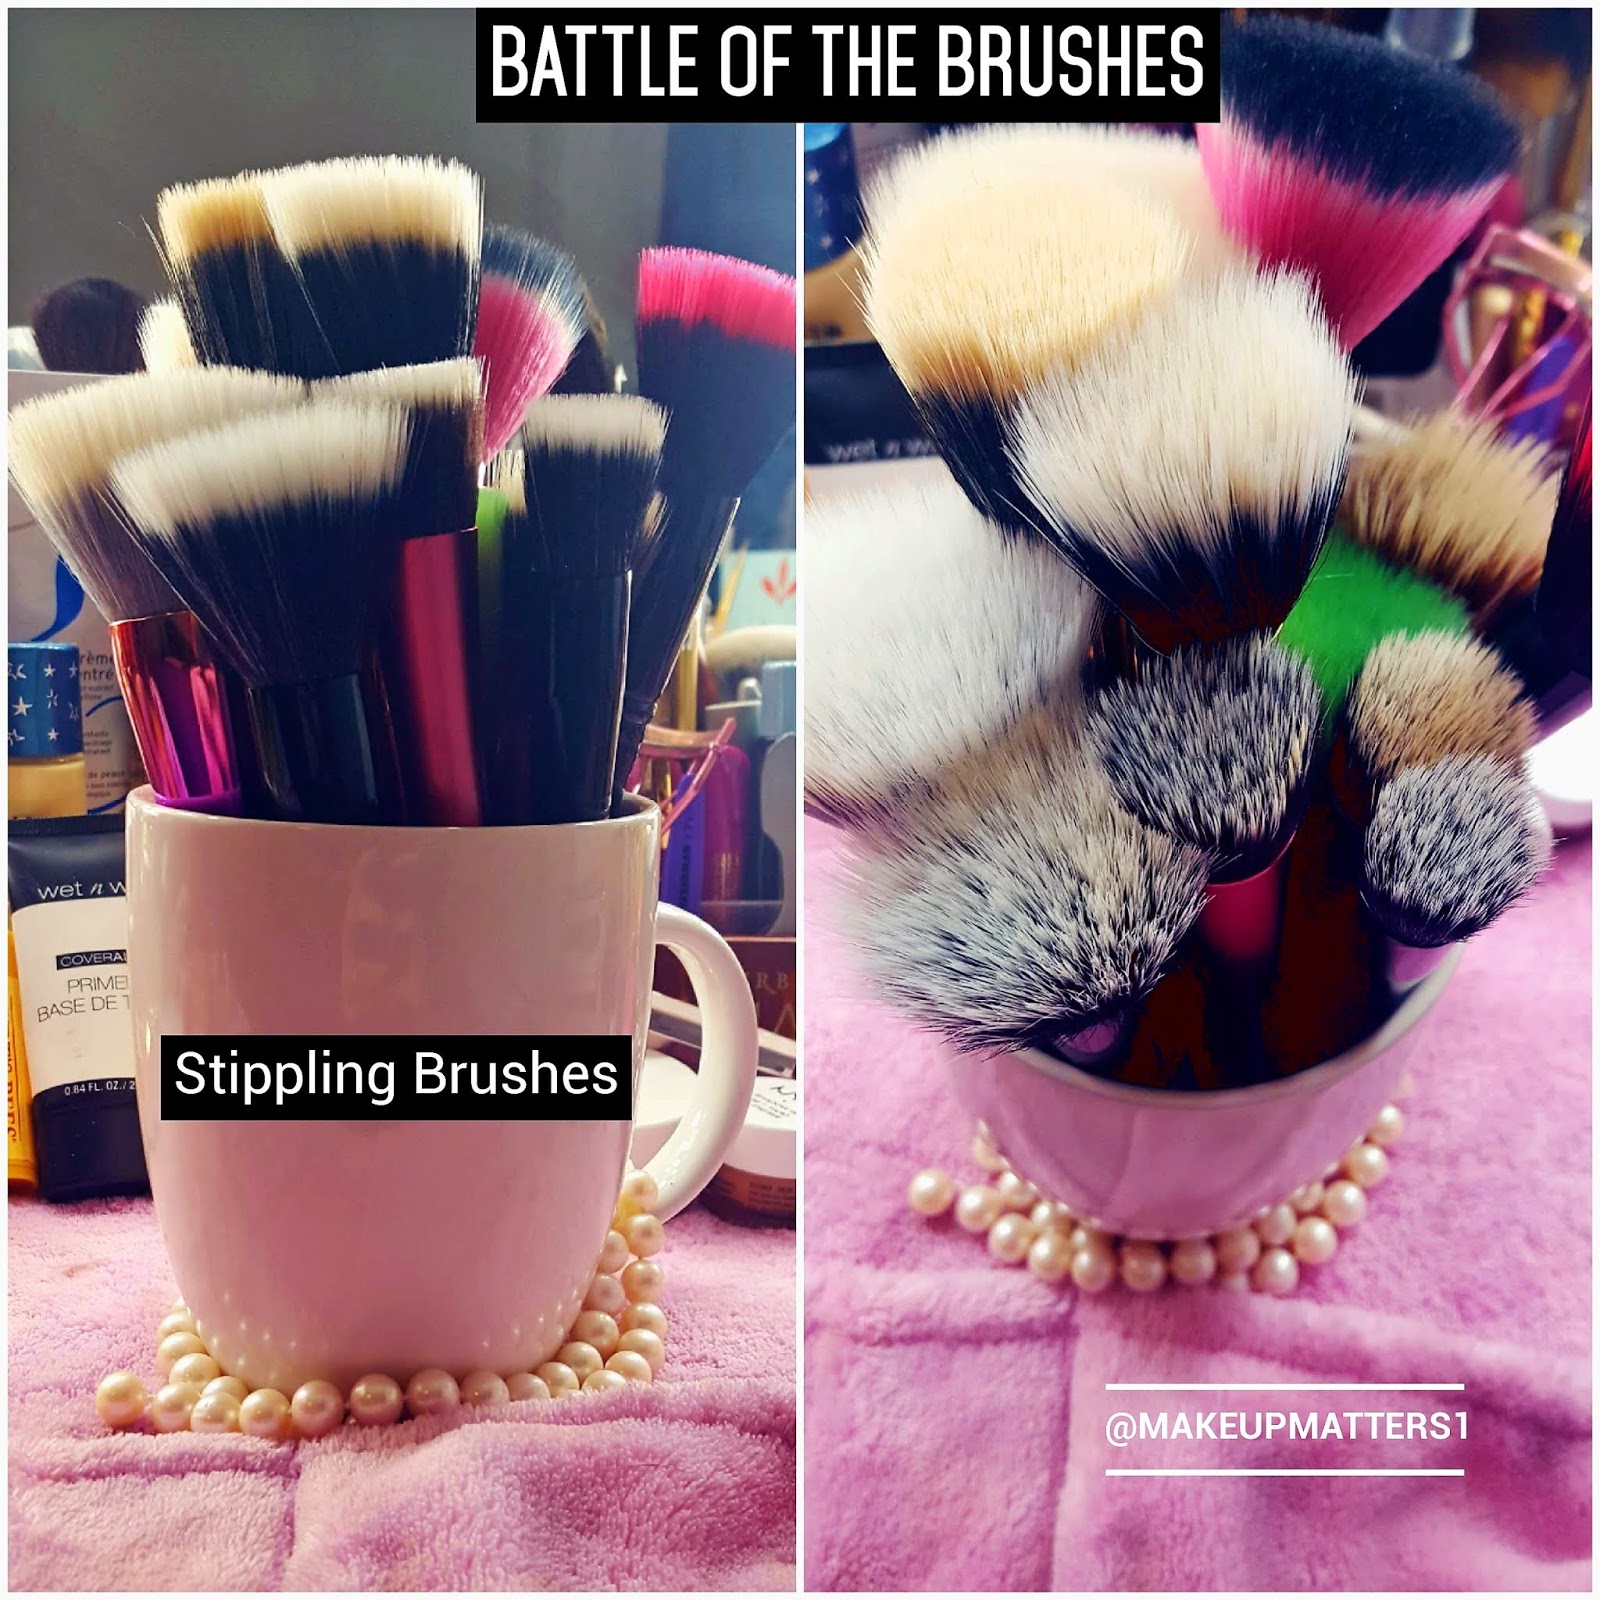 Battle for the best paint brush